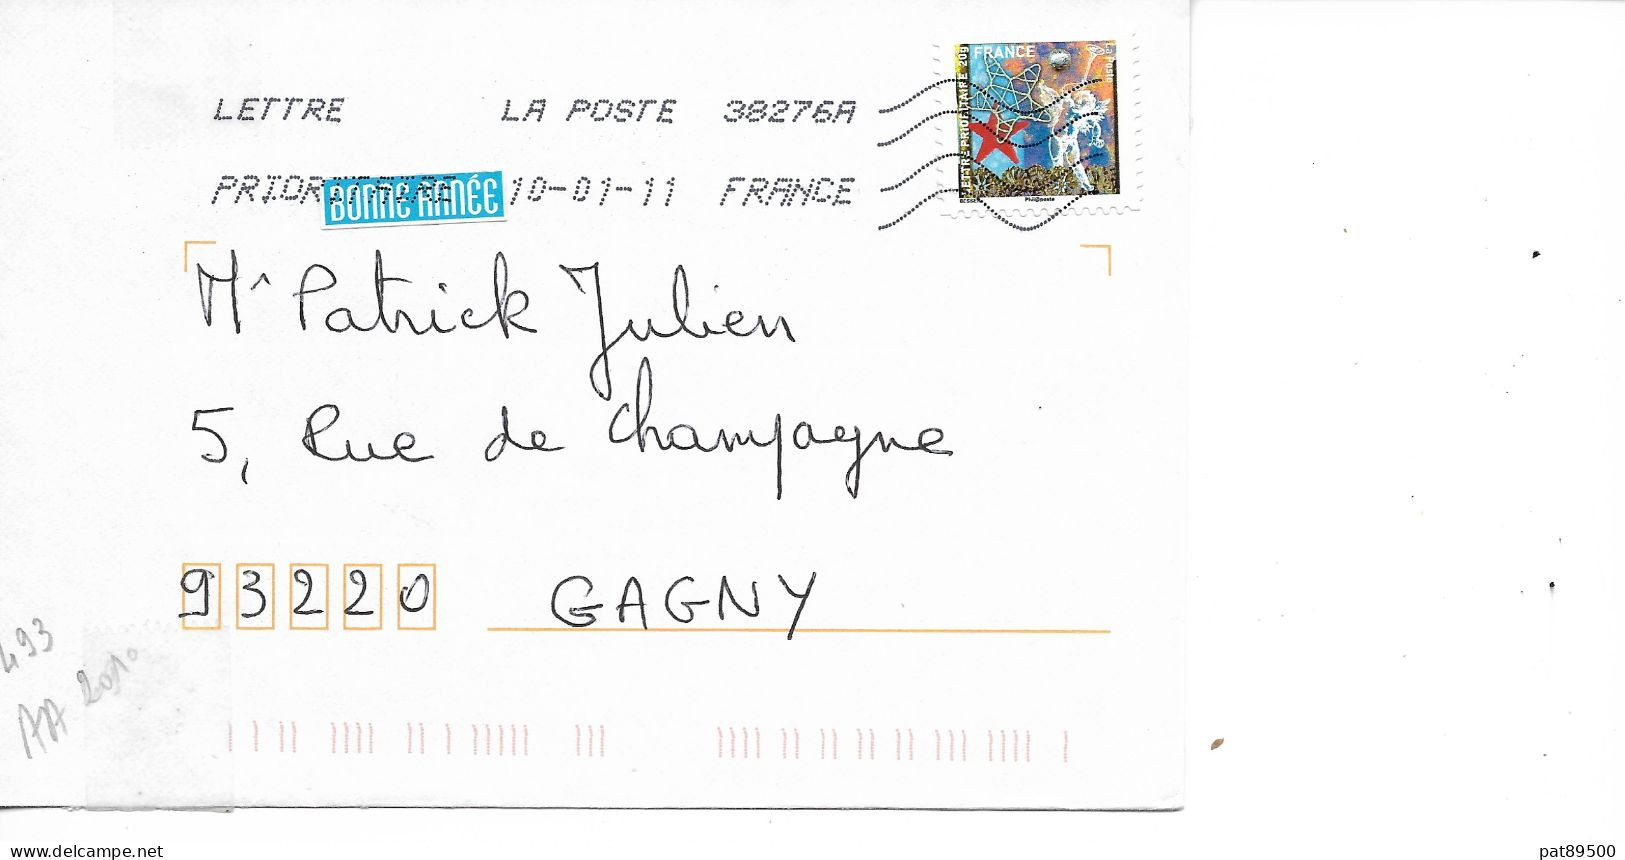 FRANCE AA 493 - 2010 - Voeux- Anges Musiciens -   Enveloppe Entière OBL. 01/2011 - Briefe U. Dokumente